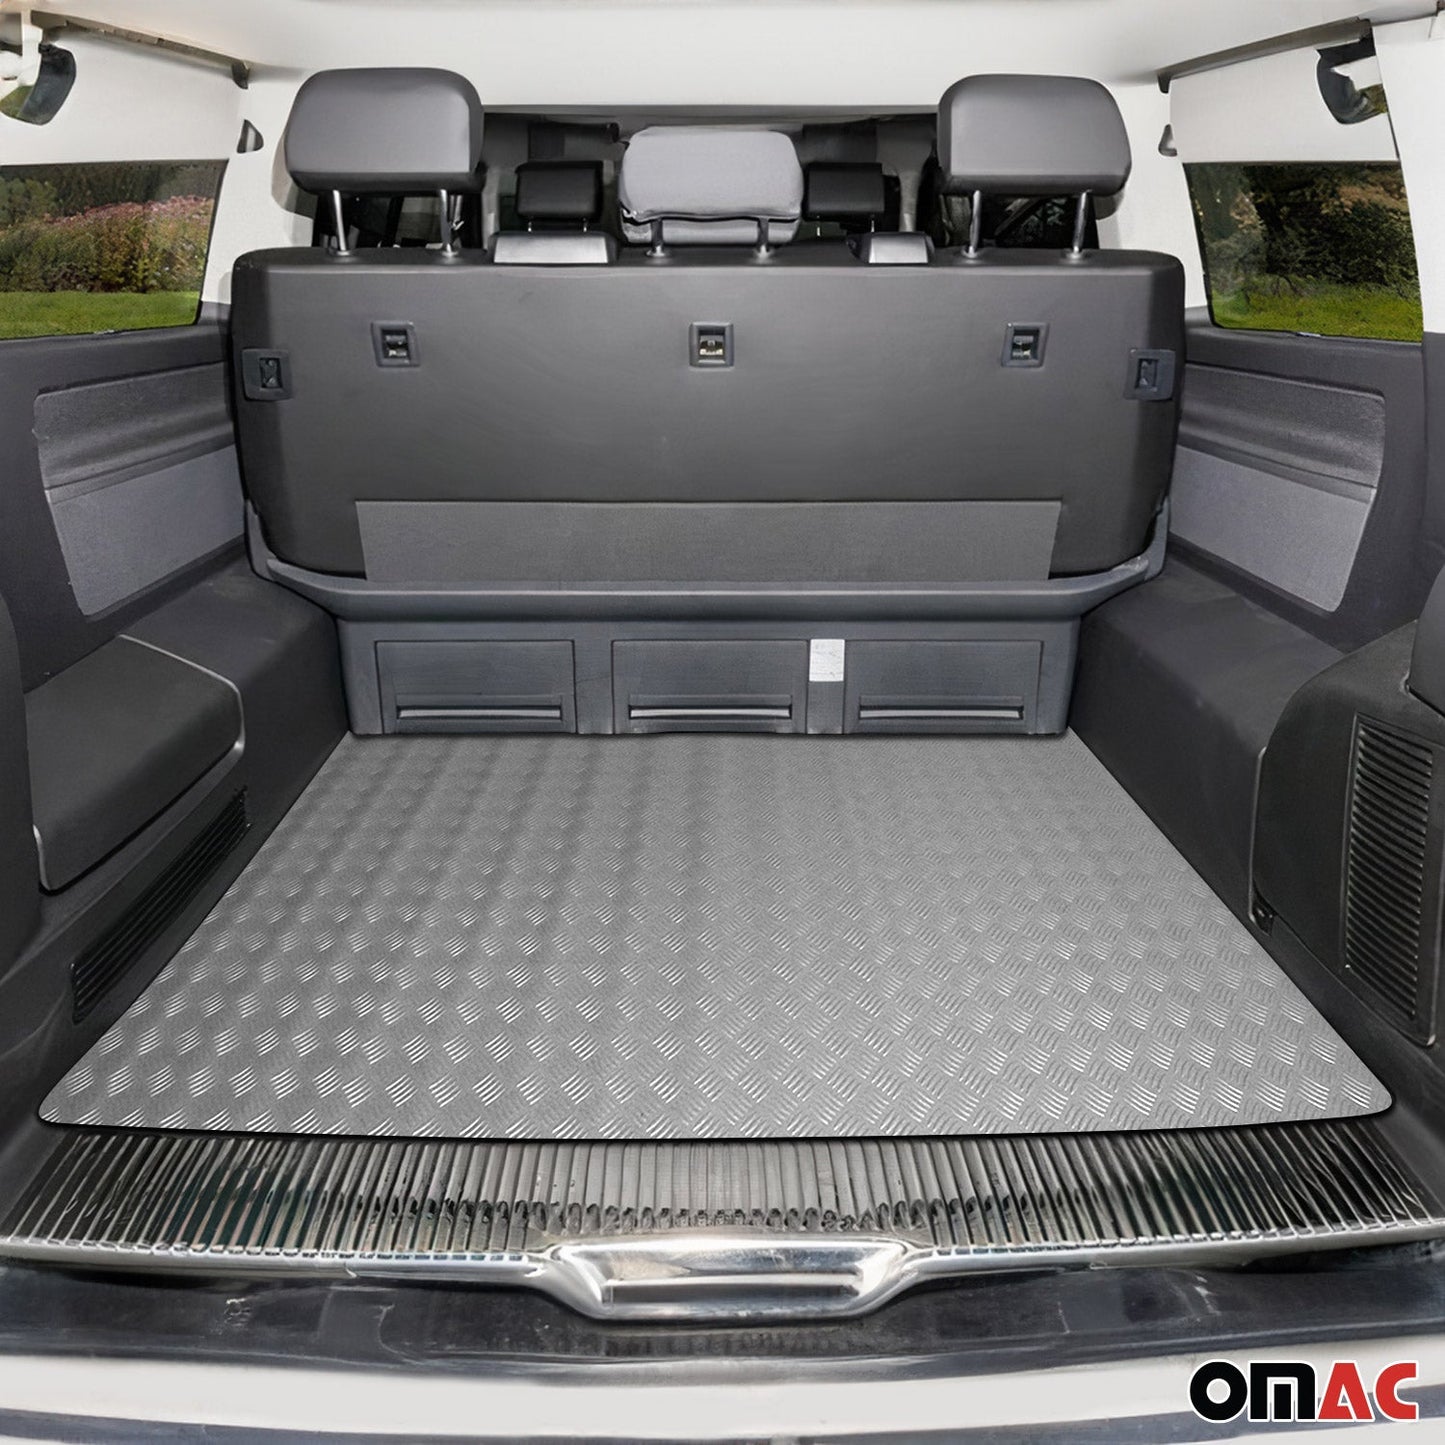 OMAC Rubber Truck Bed Liner Trunk Mat Flooring Mat 40x79 inch Chequered Grey U014790